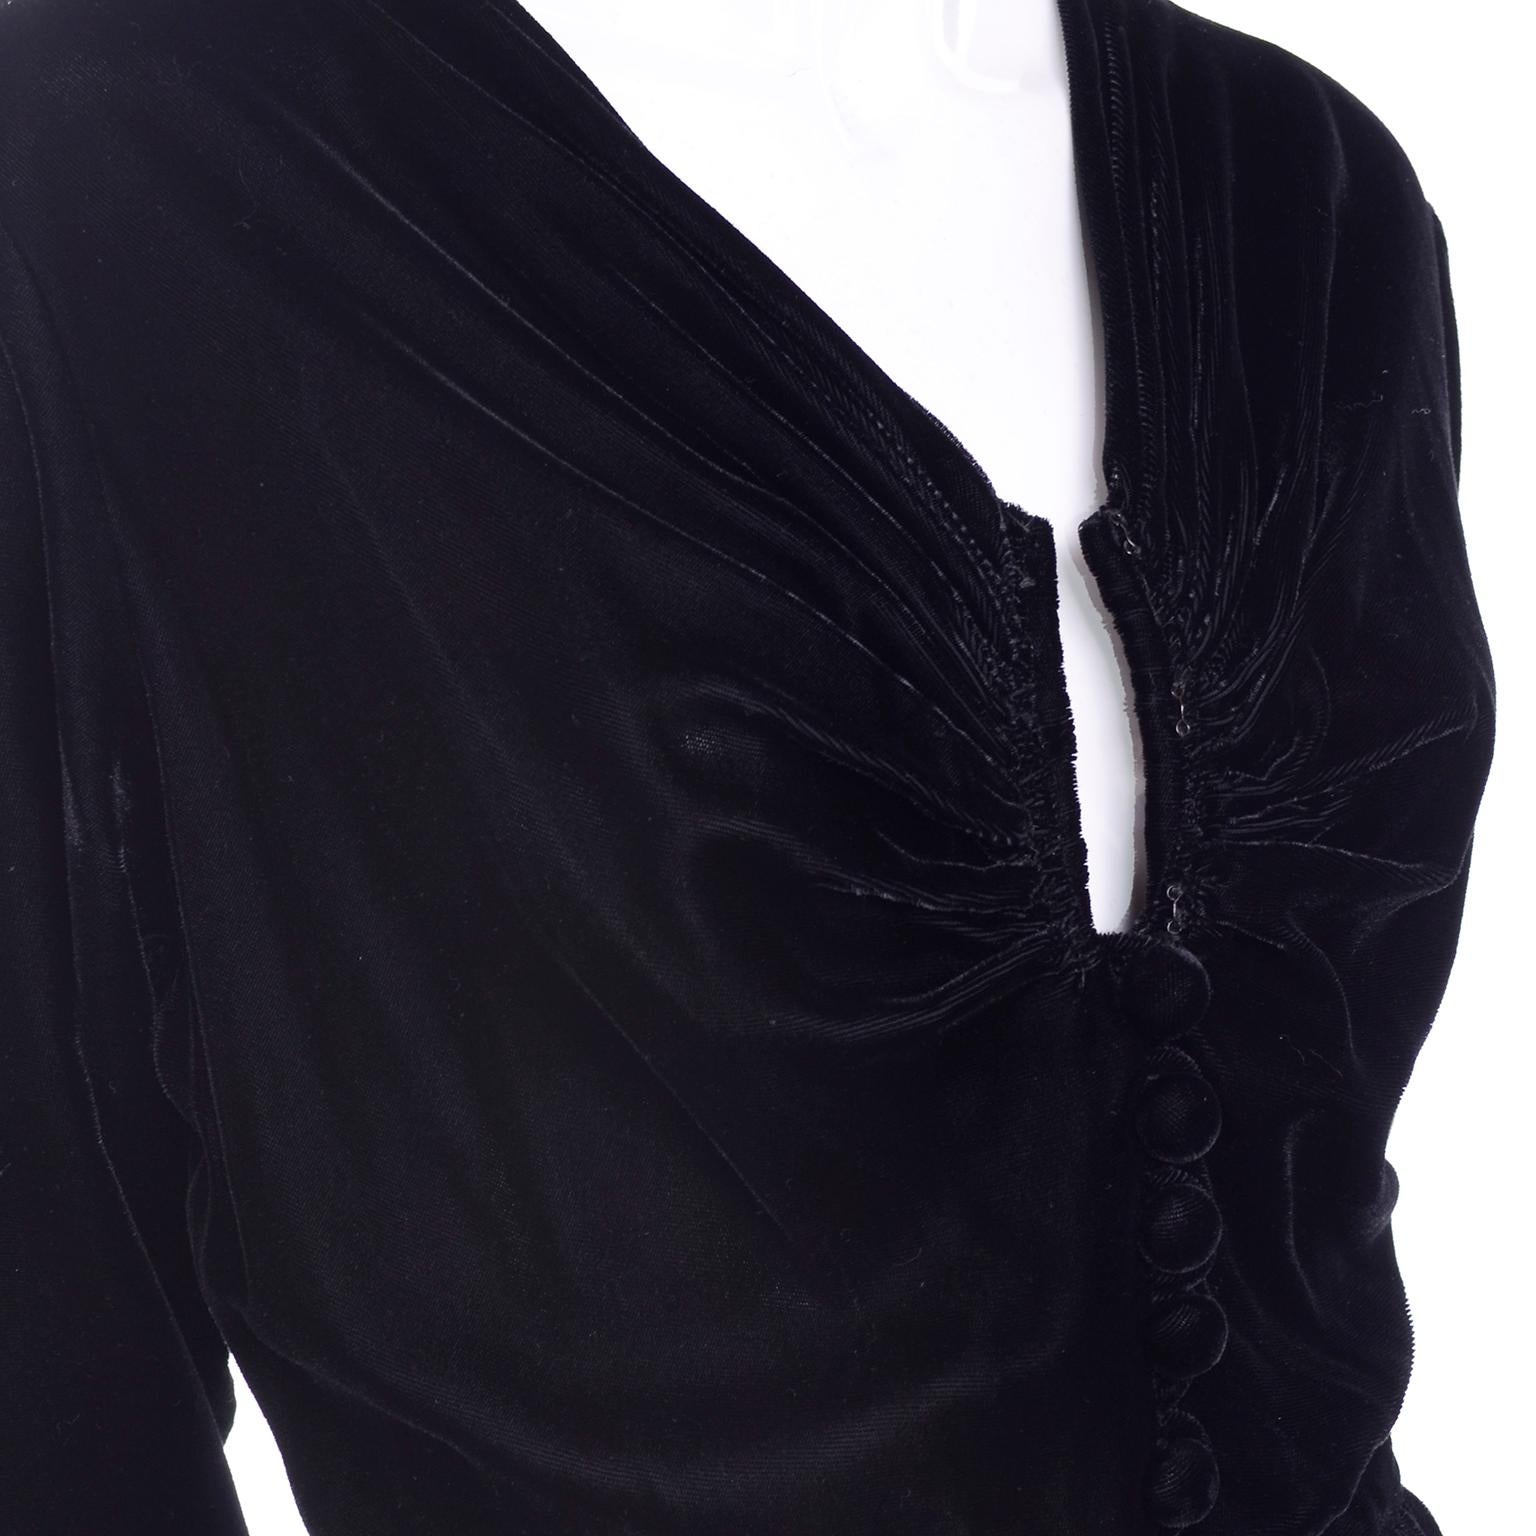 Vintage 1940s Black Velvet Evening Dress or Hostess Gown For Sale at ...